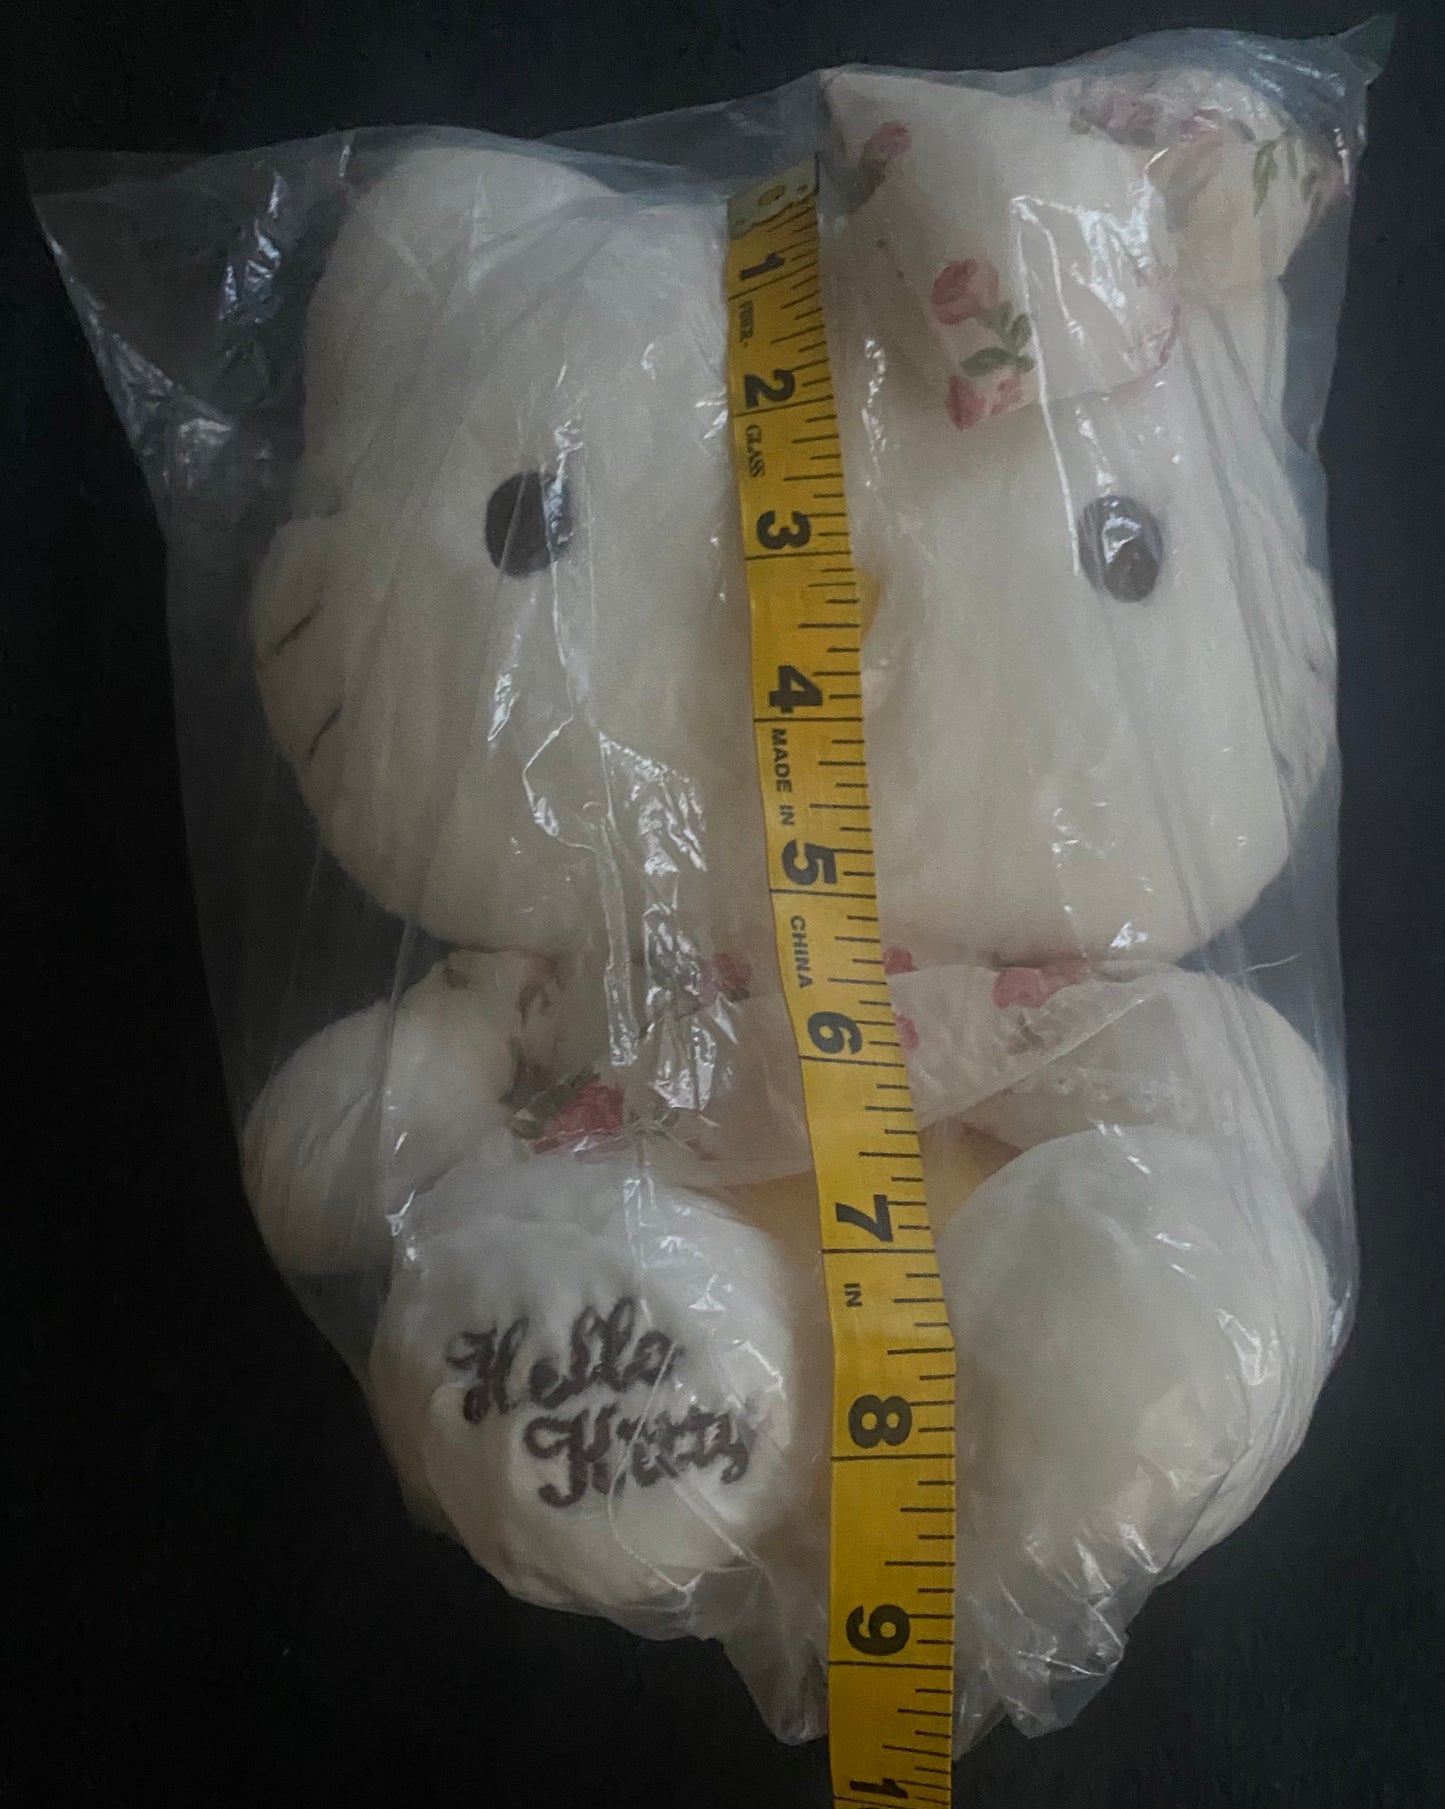 Adorable Kawaii Sanrio Hello Kitty Plush Doll - Stuffed Toy